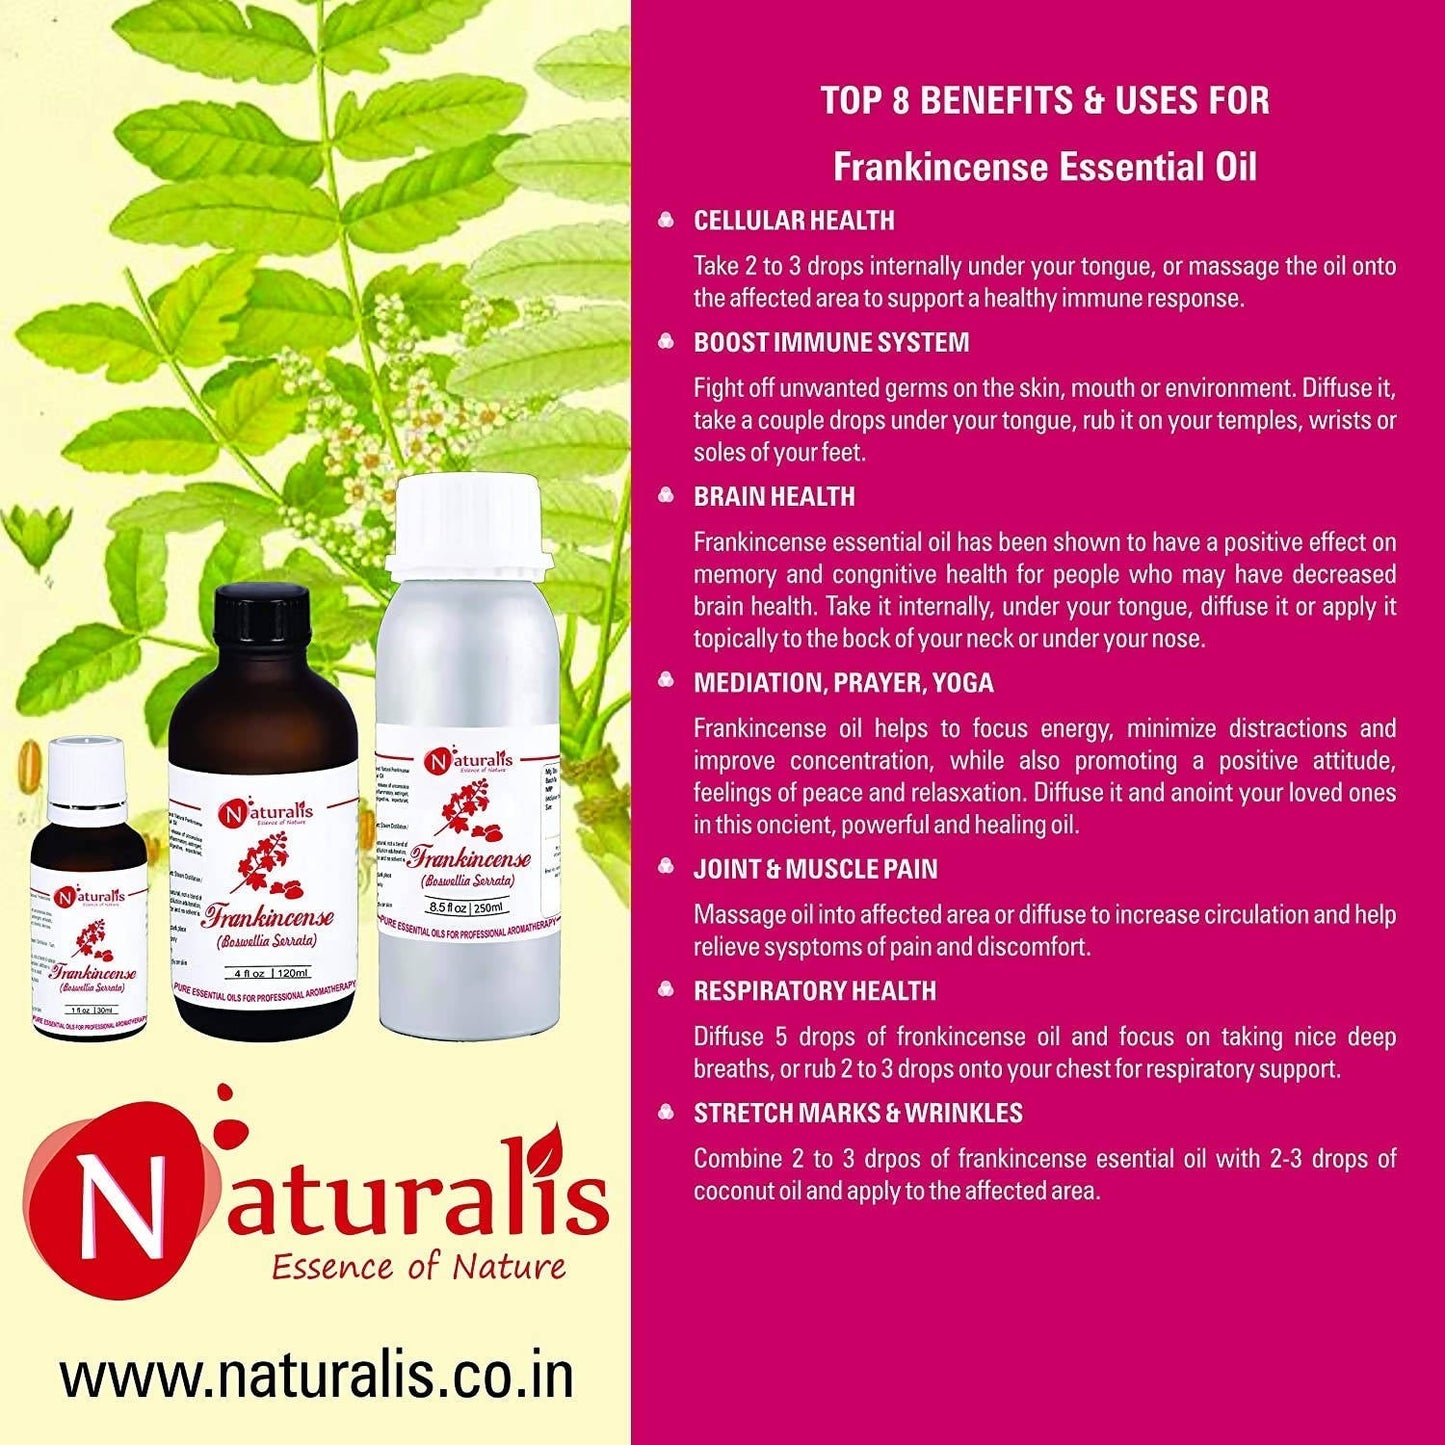 Naturalis Essence of Nature Frankincense Essential Oil